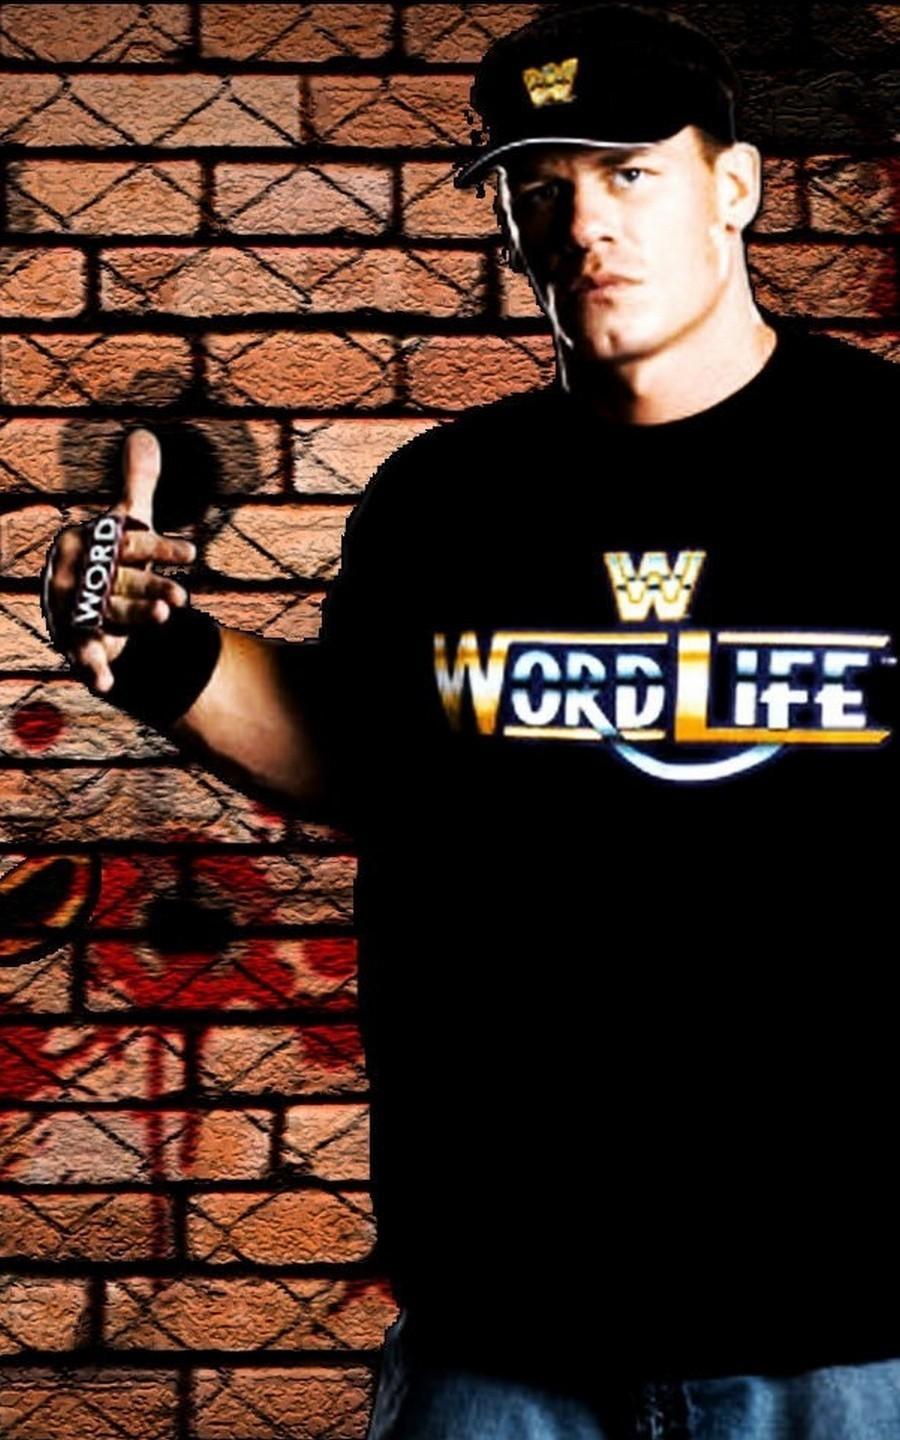 John Cena Wallpaper For Android Apk Download - wordlife john cena roblox